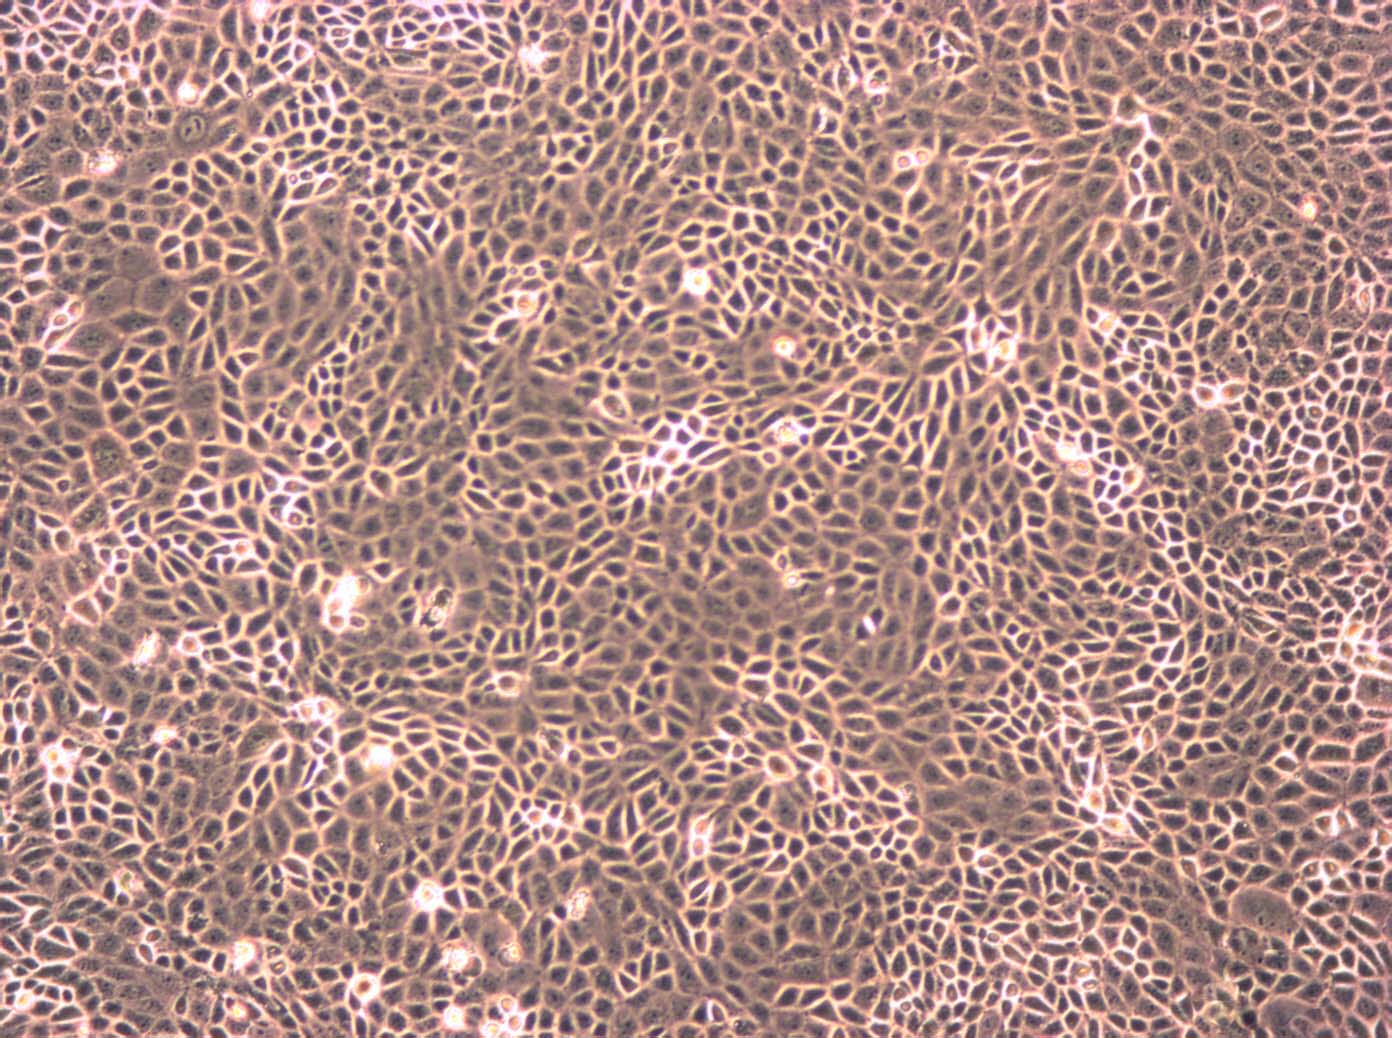 HMEC-1 Cells|人微血管内皮需消化细胞系,HMEC-1 Cells